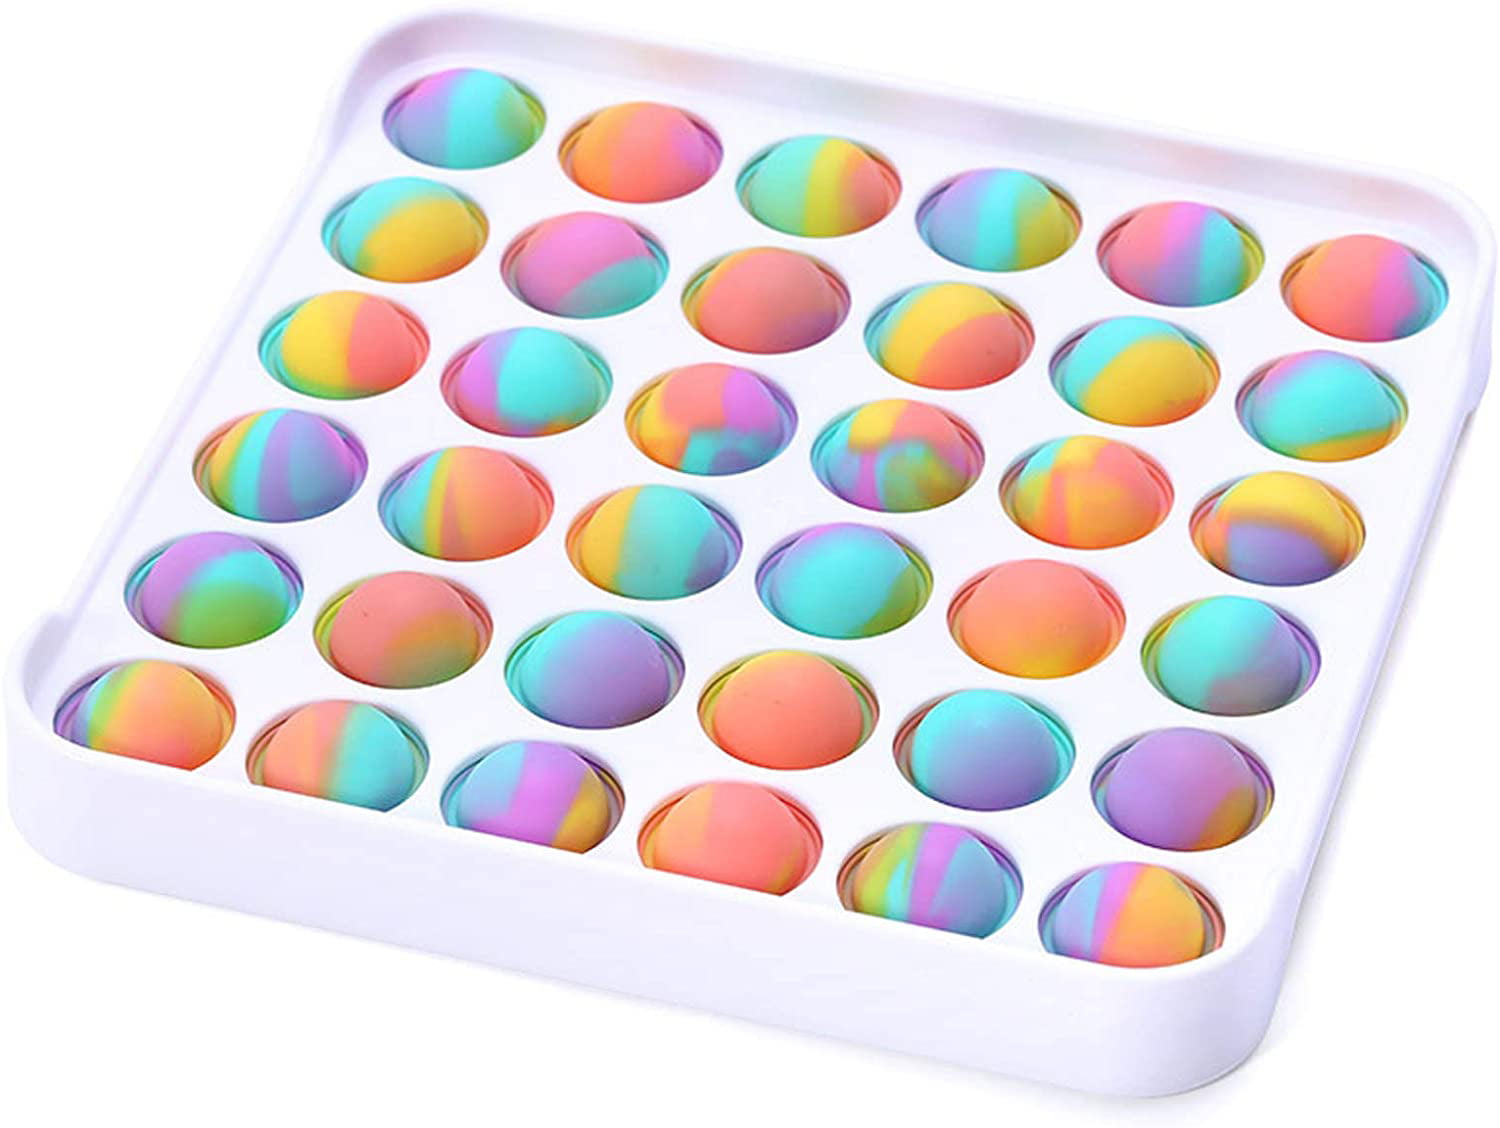 Details about   Bubble It Silicone Sensory Fidget Rainbow Toy Popet Autism Stress Relief Game US 